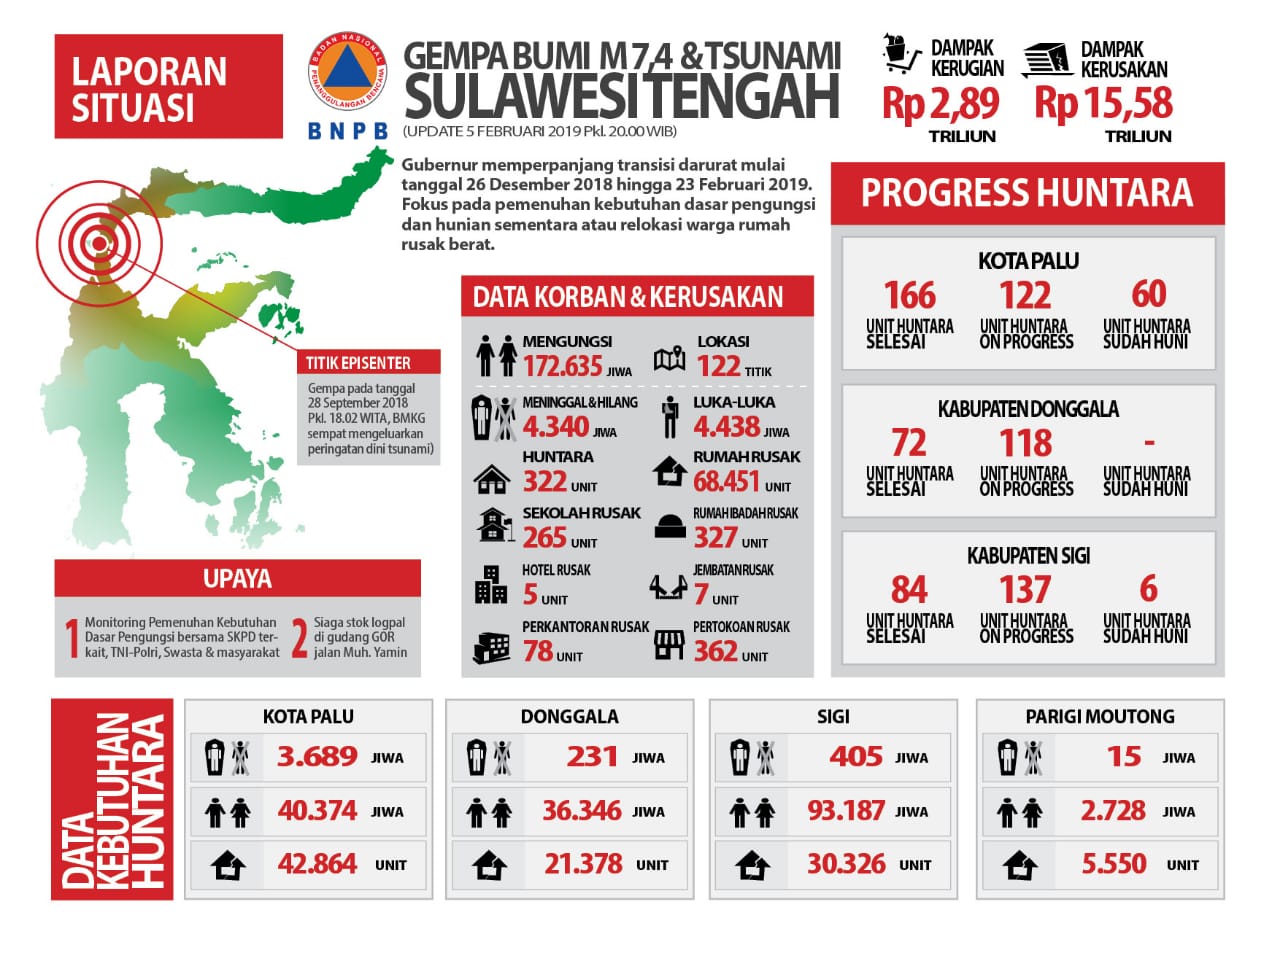 Gempabumi dan Tsunami Sulawesi Tengah